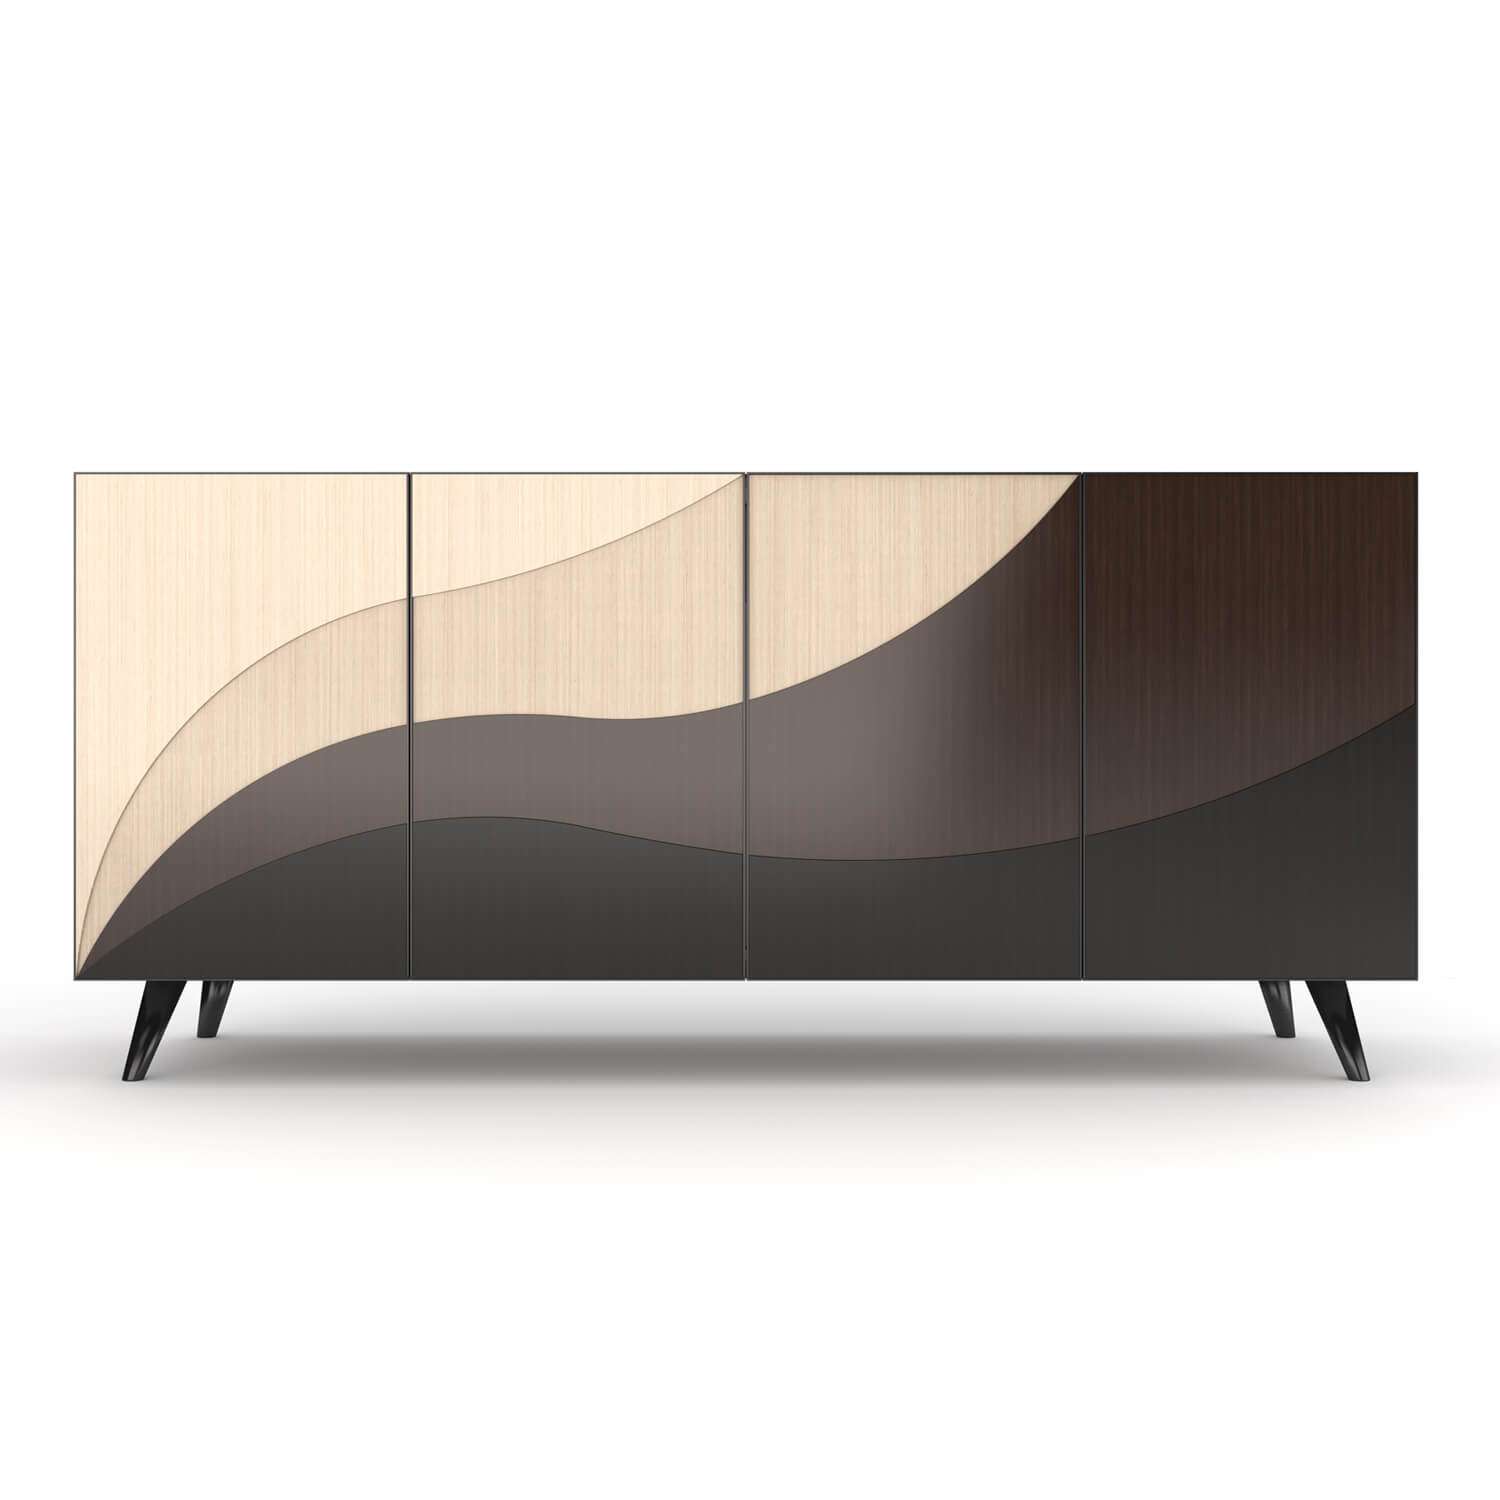 Shop - Marano Furniture : : Redefine your mindscape